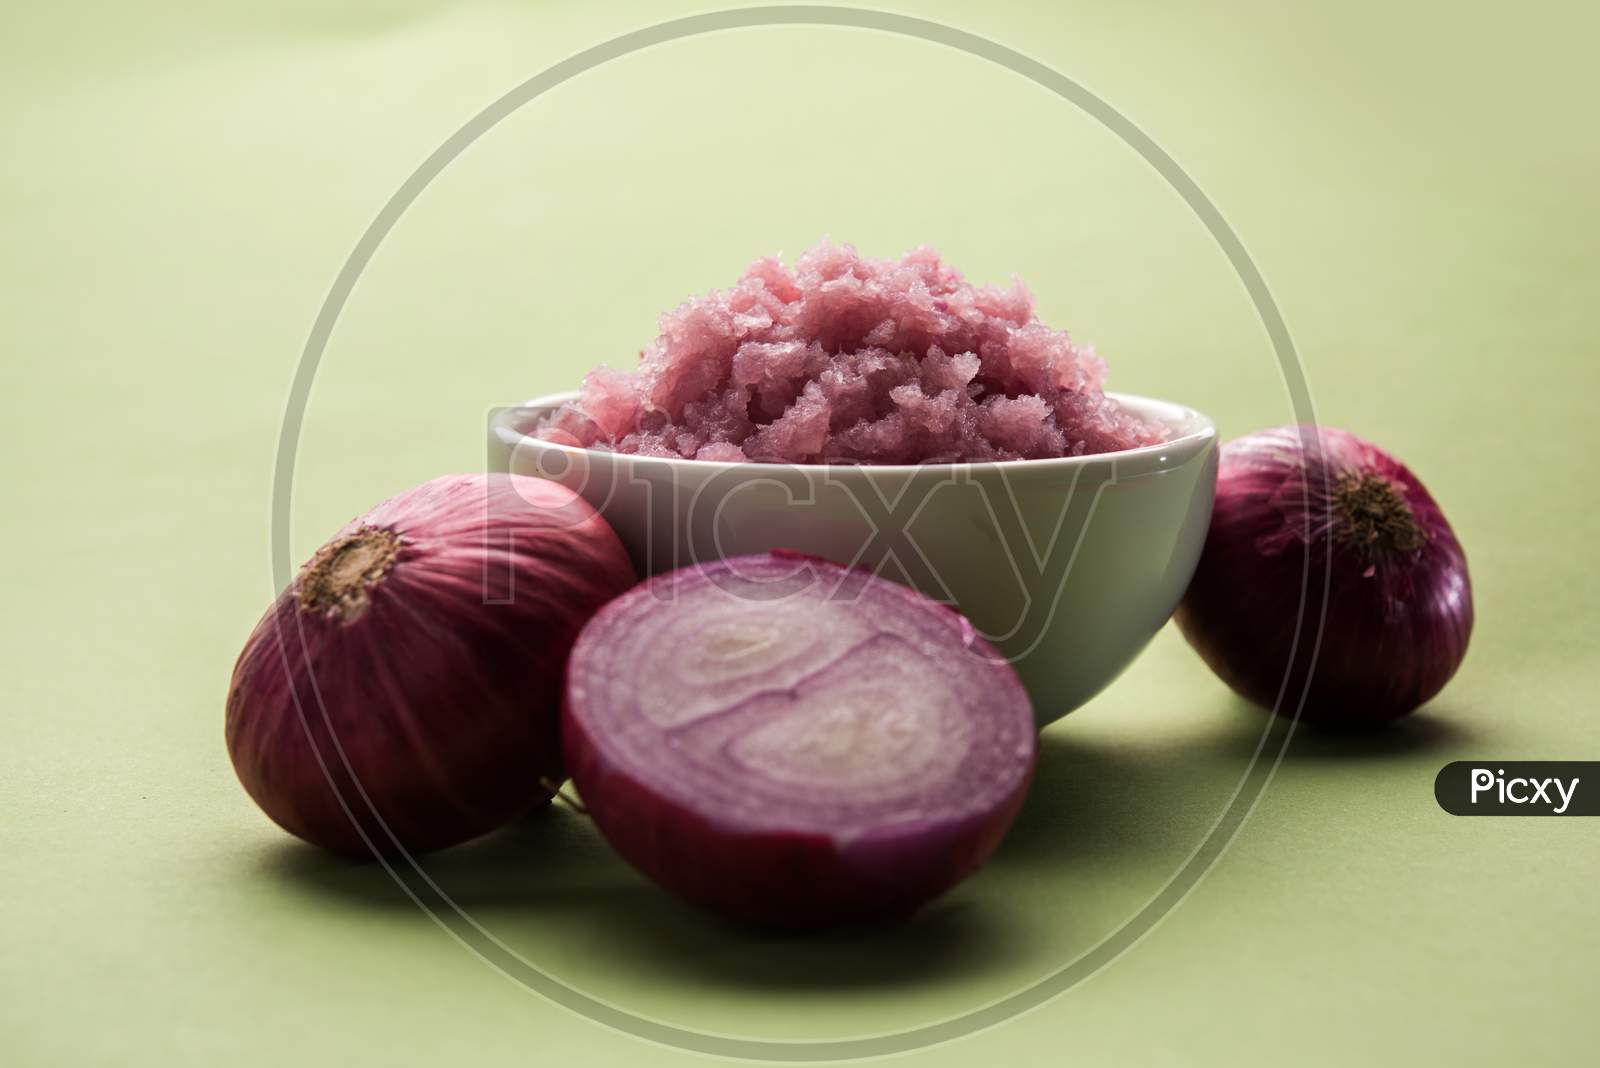 Onion paste or puree / mashed onion / Pyaj Puree